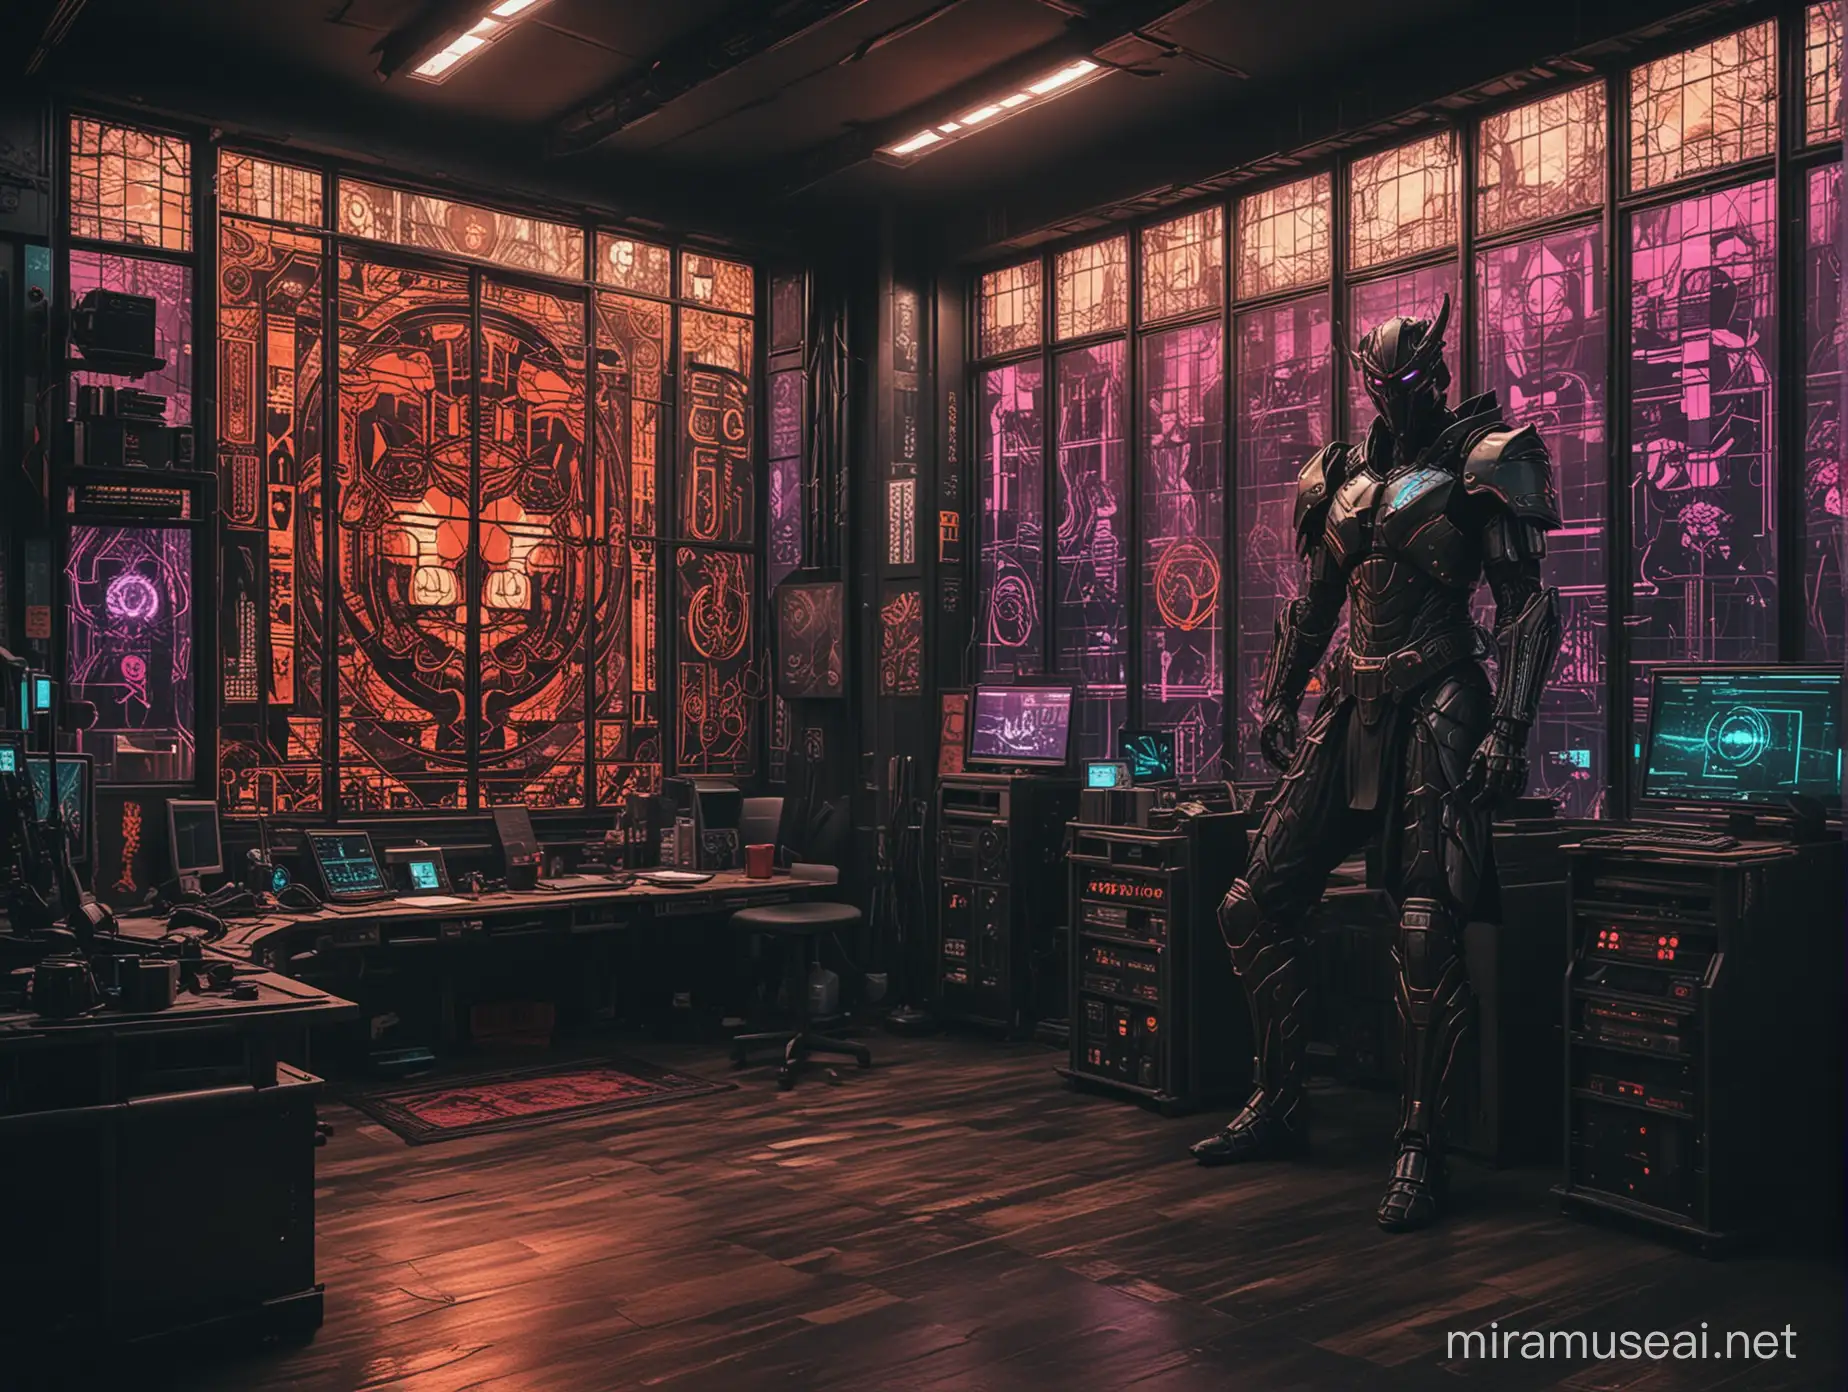 Futuristic Cyberpunk Tech Room with Illuminated Stained Glass Window Featuring Cyberpunk Demon Samurai in Cybertech Armor